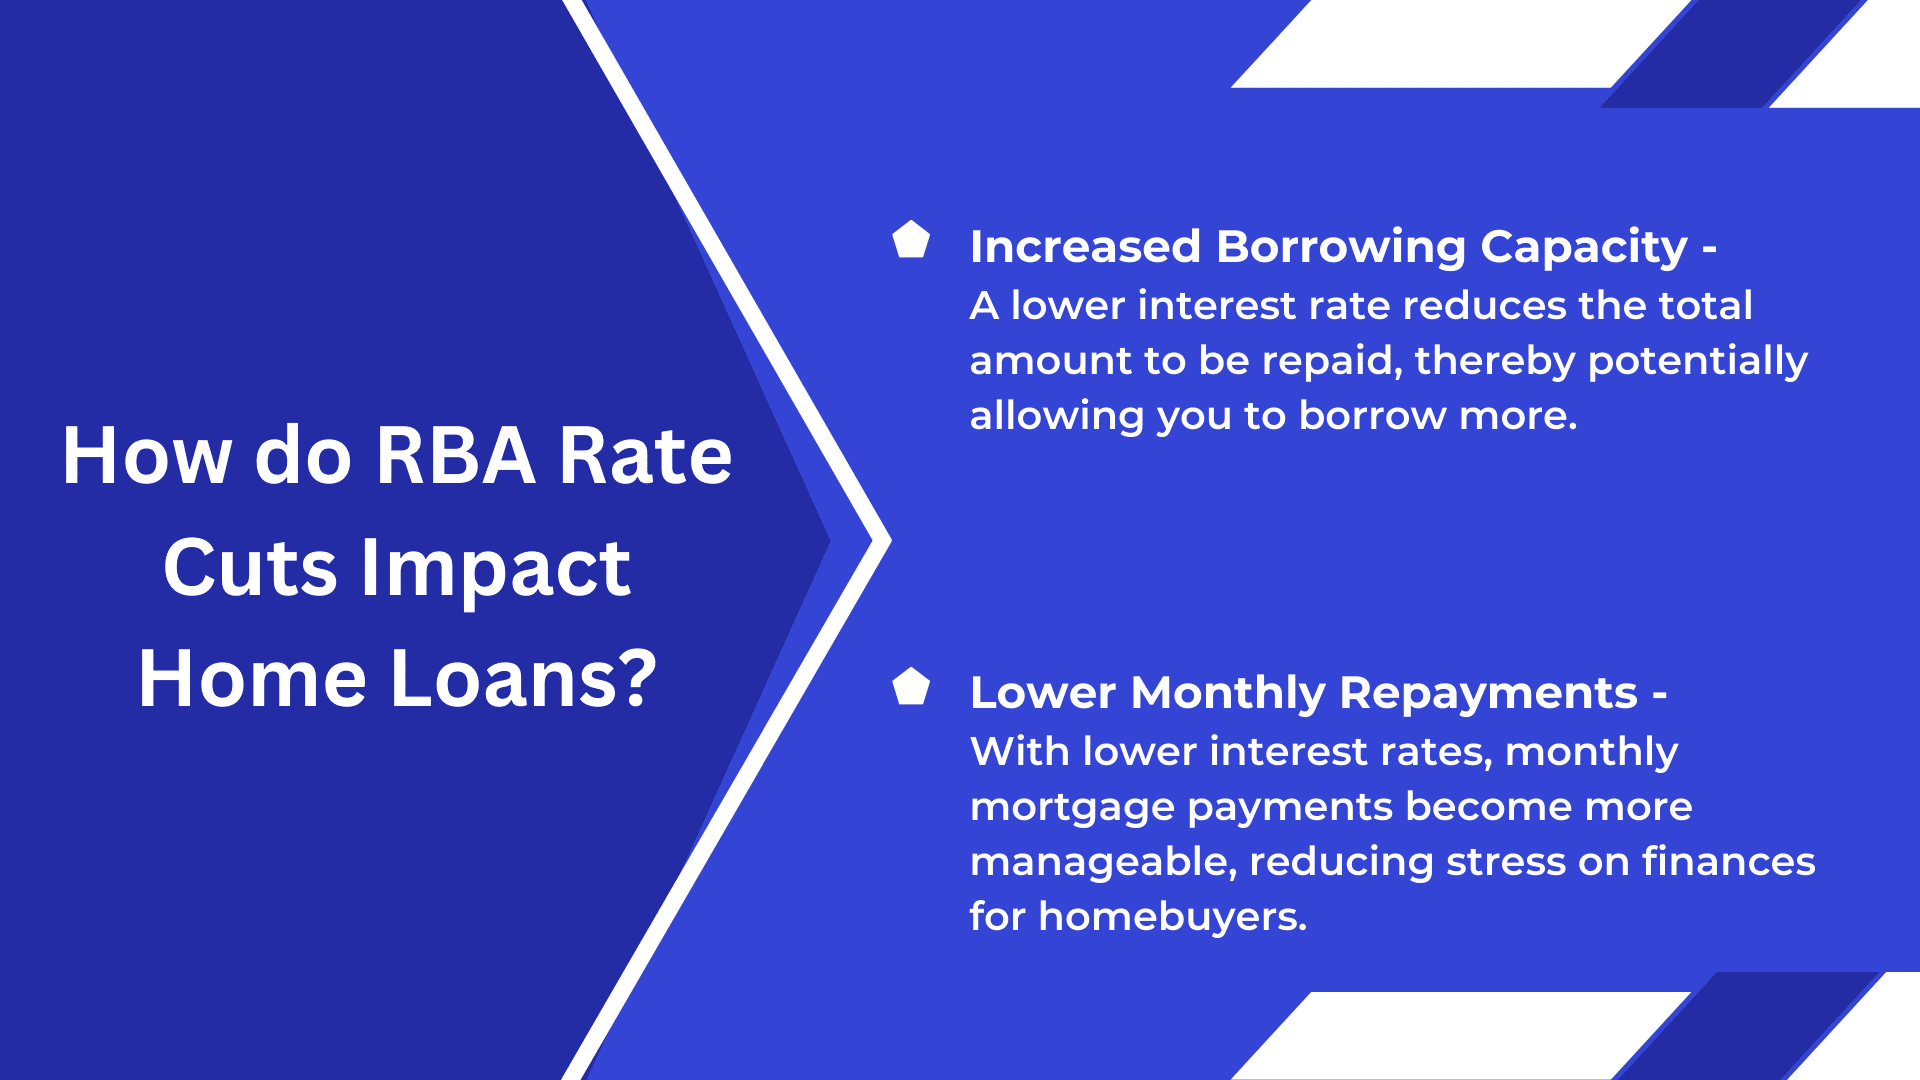 How do RBA Rate Cuts Impact Home Loans?